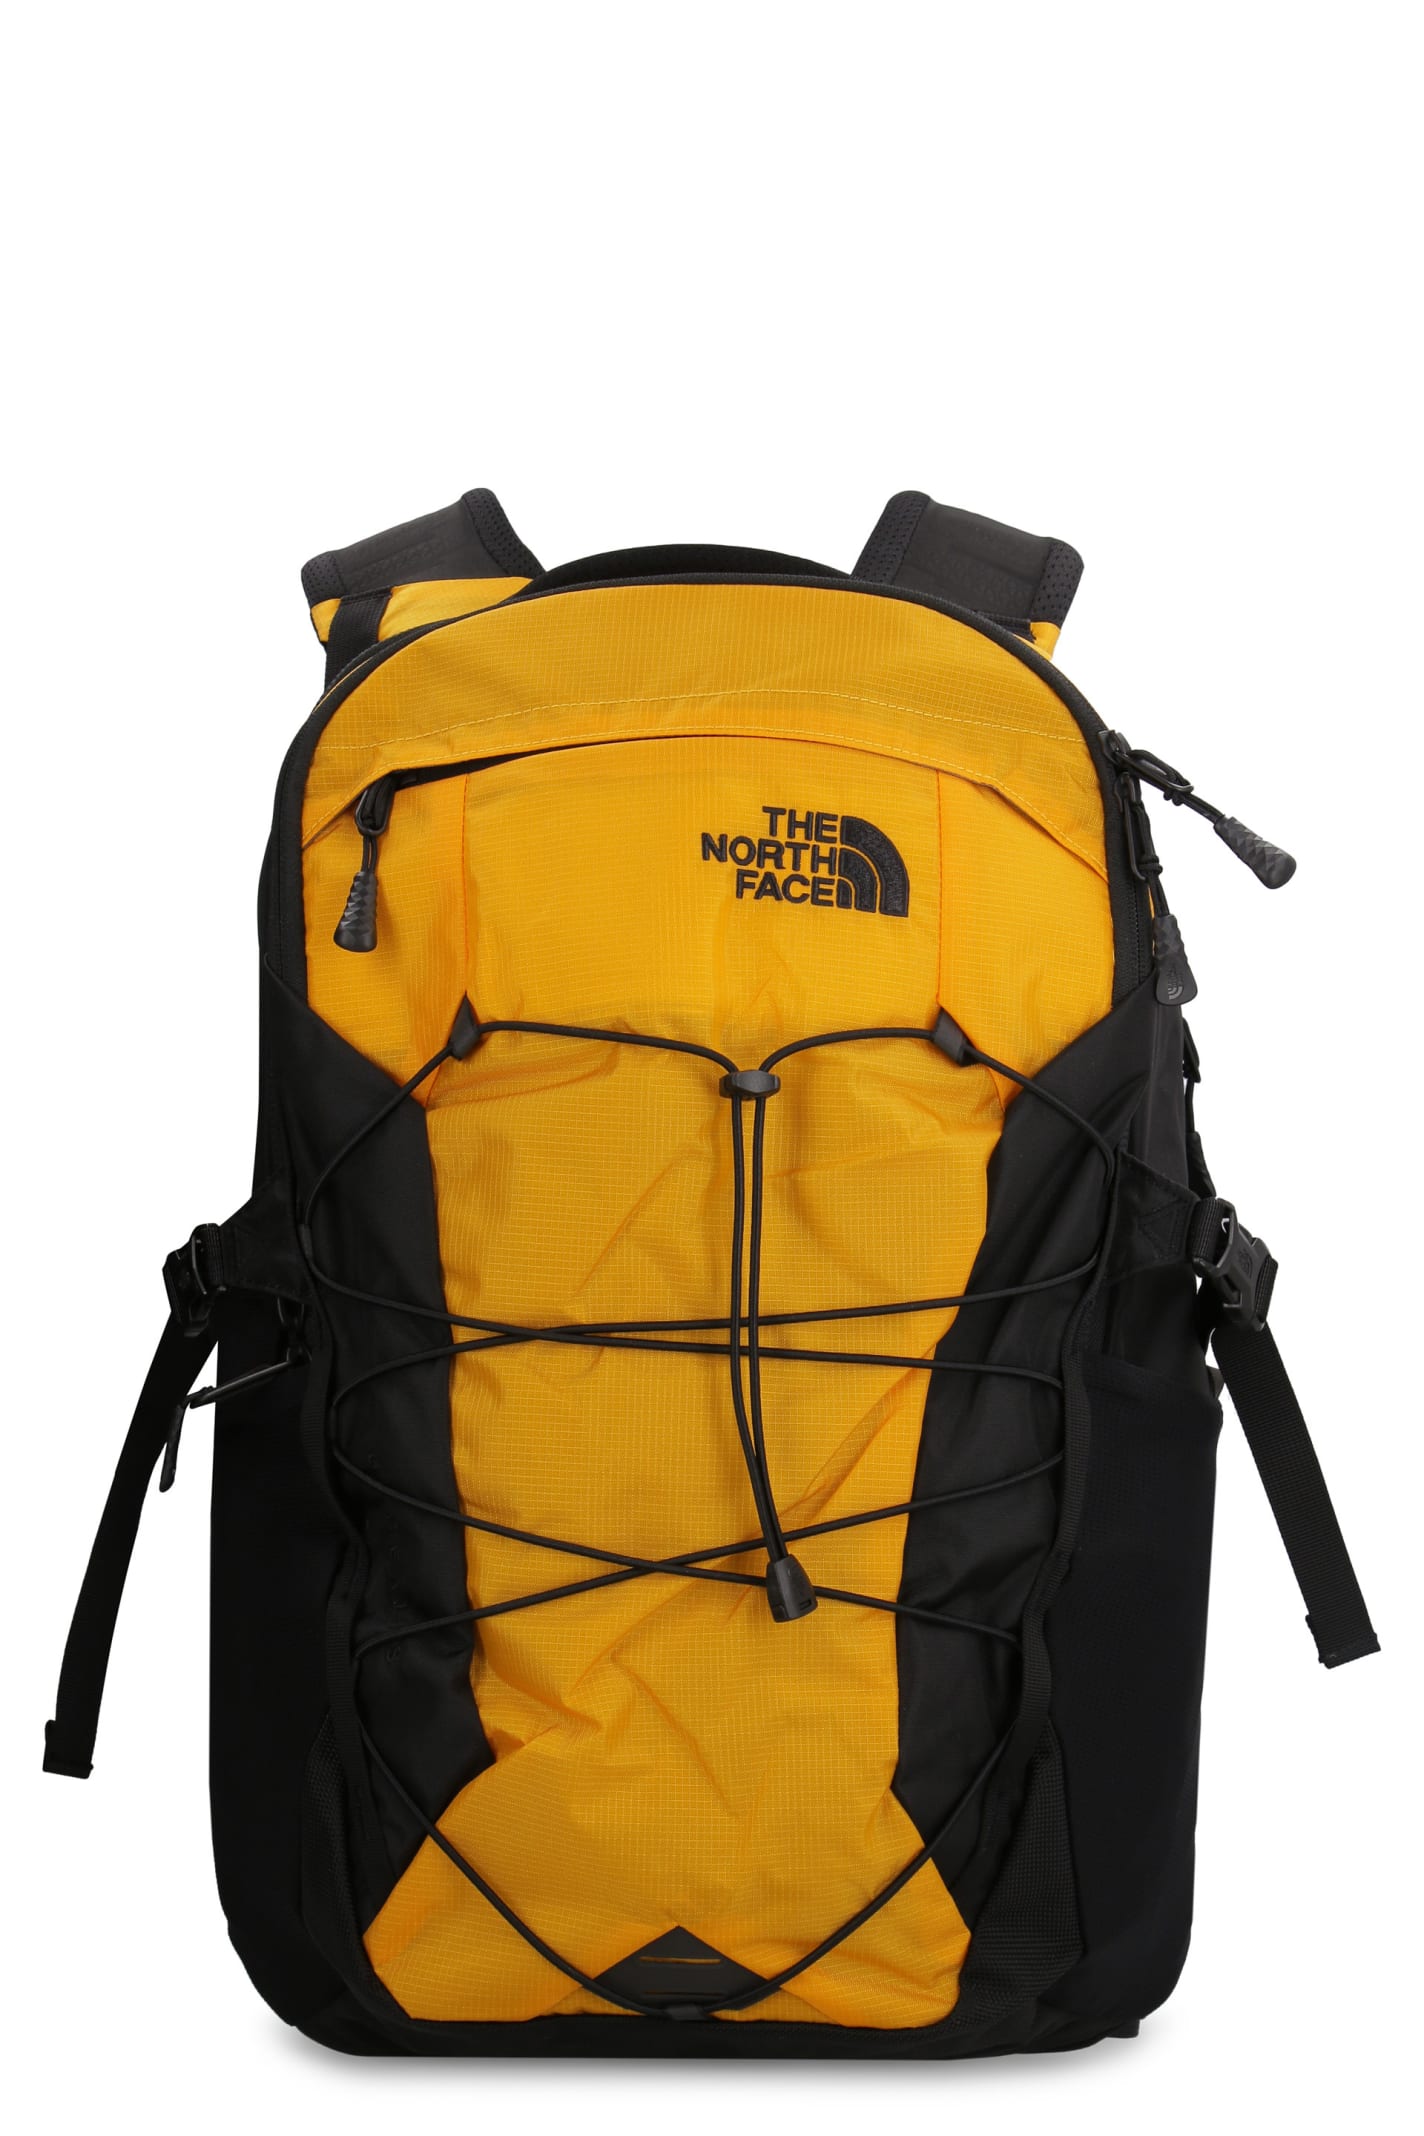 The North Face Borealis Nylon Backpack